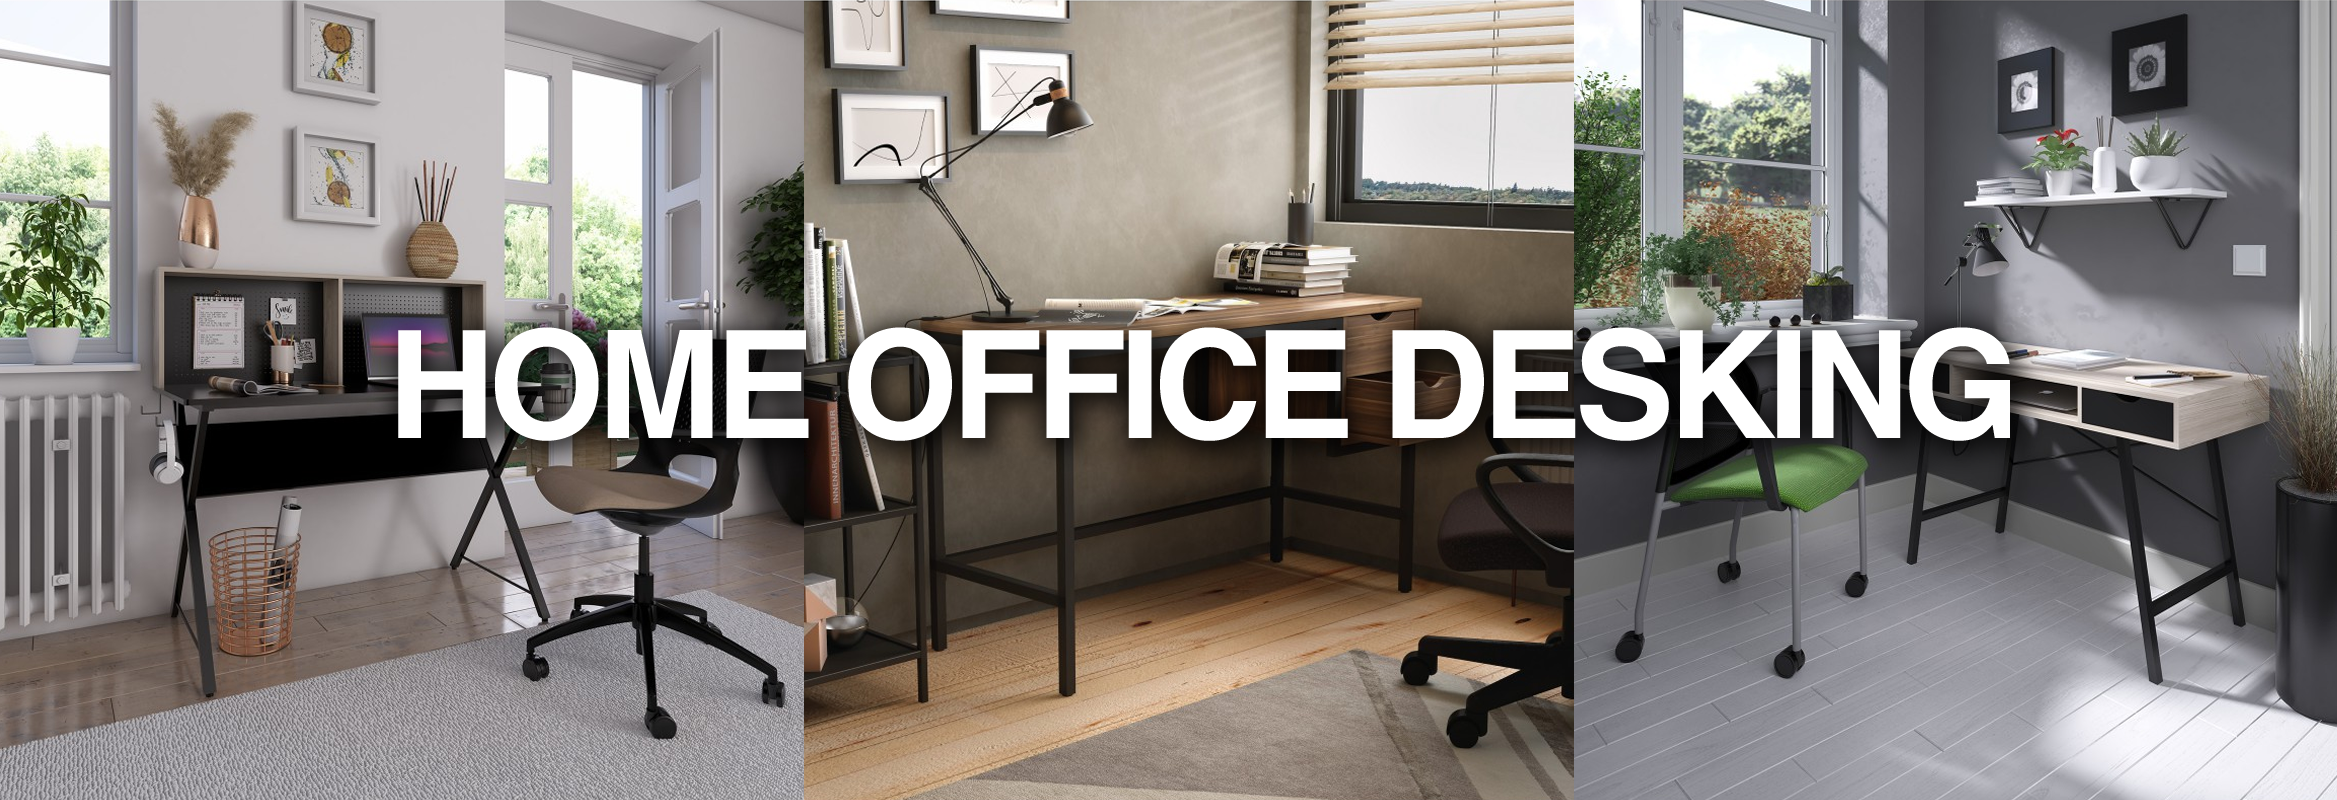 Home Office Desking